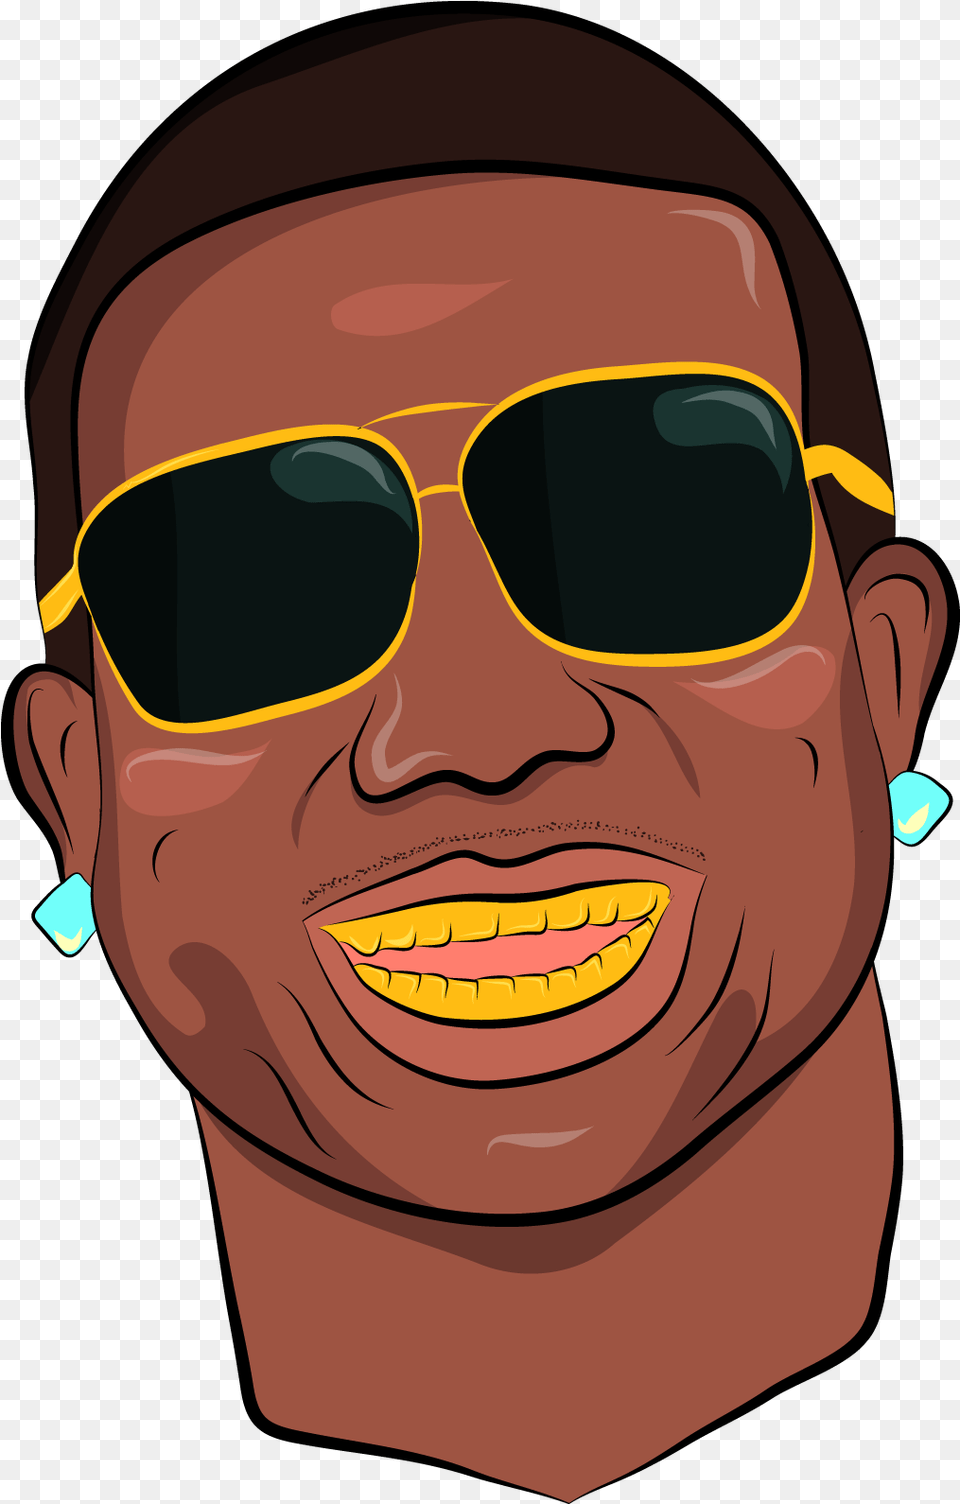 Gucci Mane 2016 Gucci Mane Cartoon, Accessories, Photography, Sunglasses, Head Png